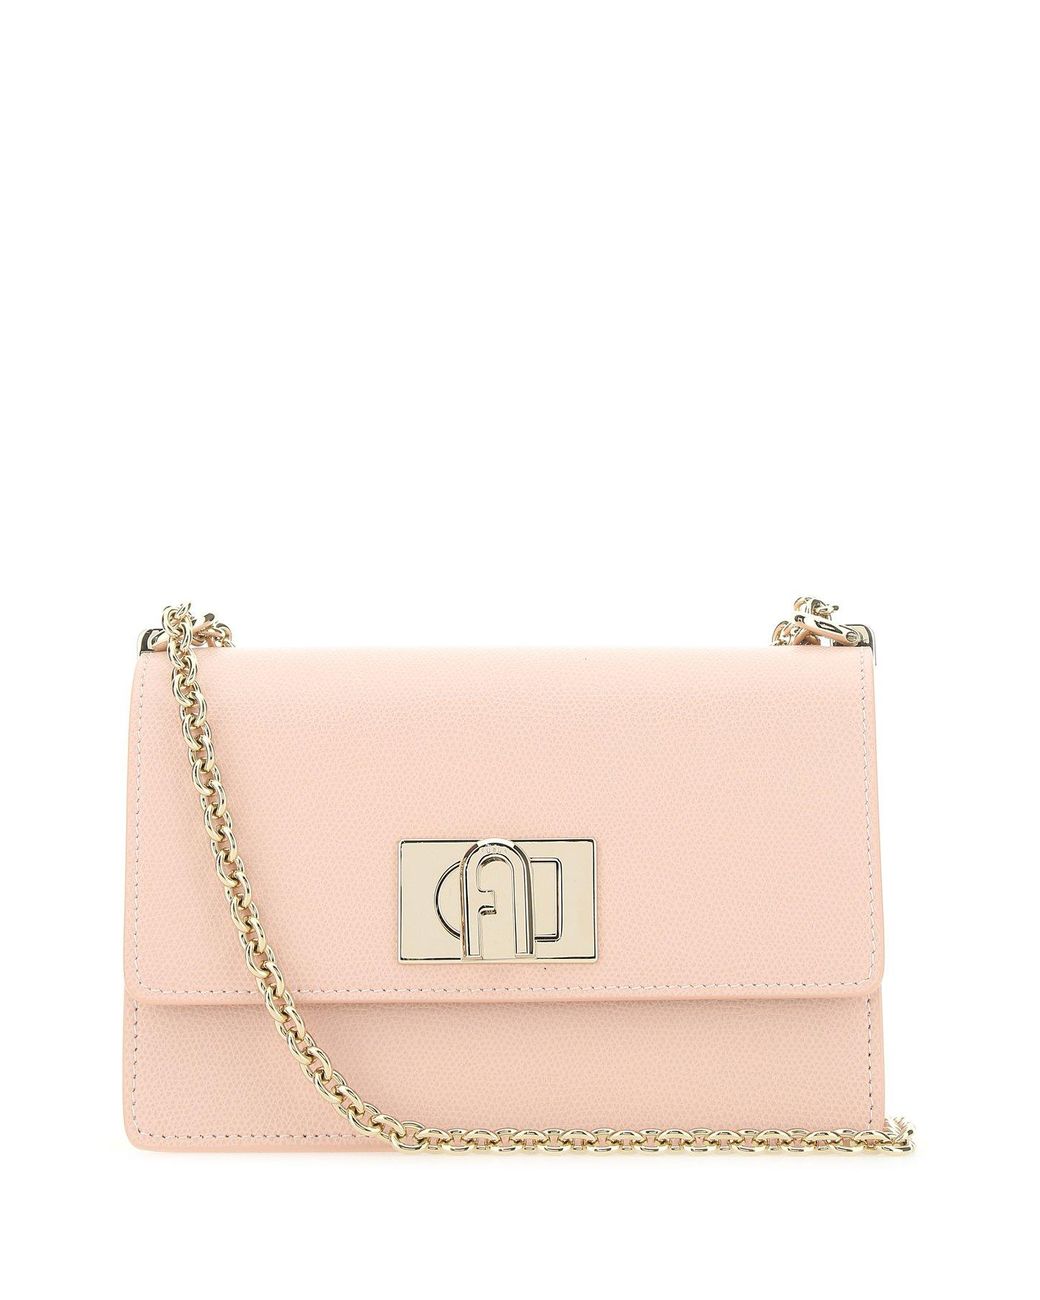 Furla Leather 1927 Mini Crossbody Bag in Pink - Lyst